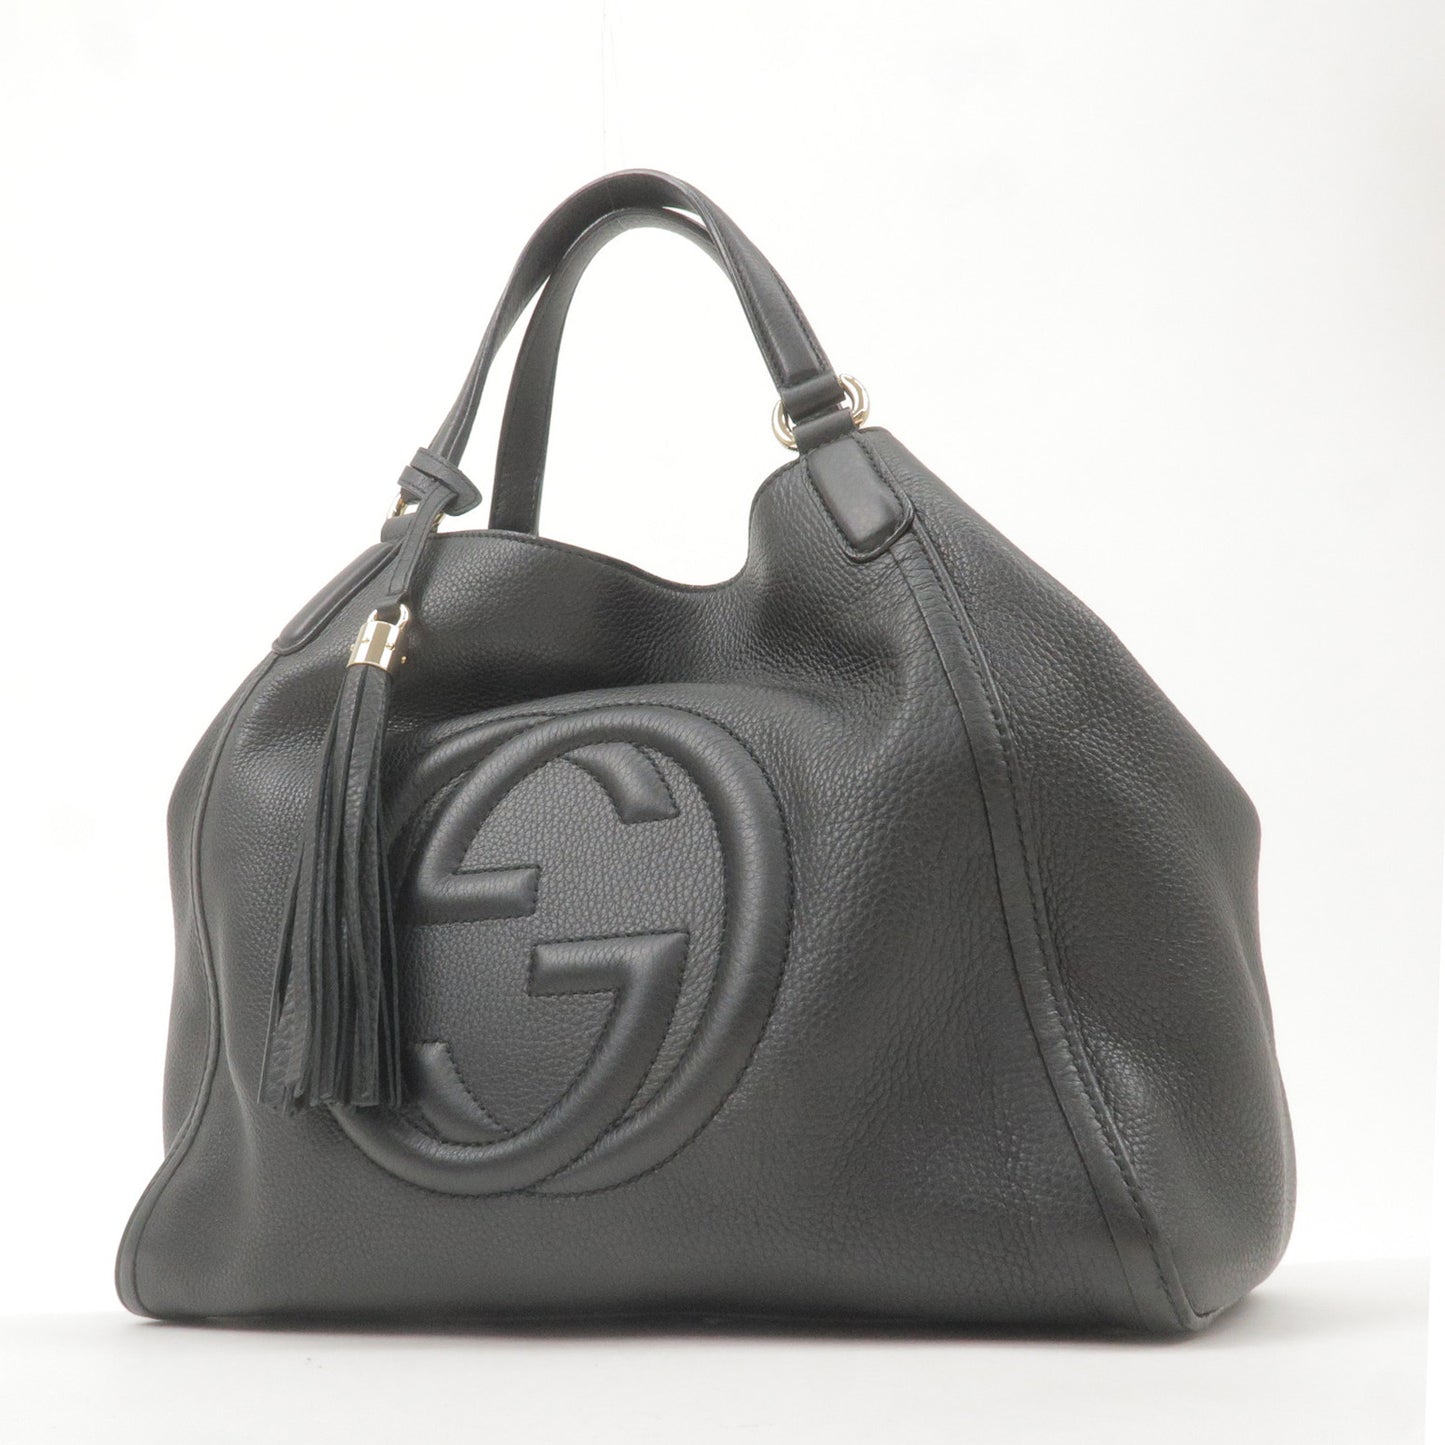 Gucci Tote Bag Black Leather